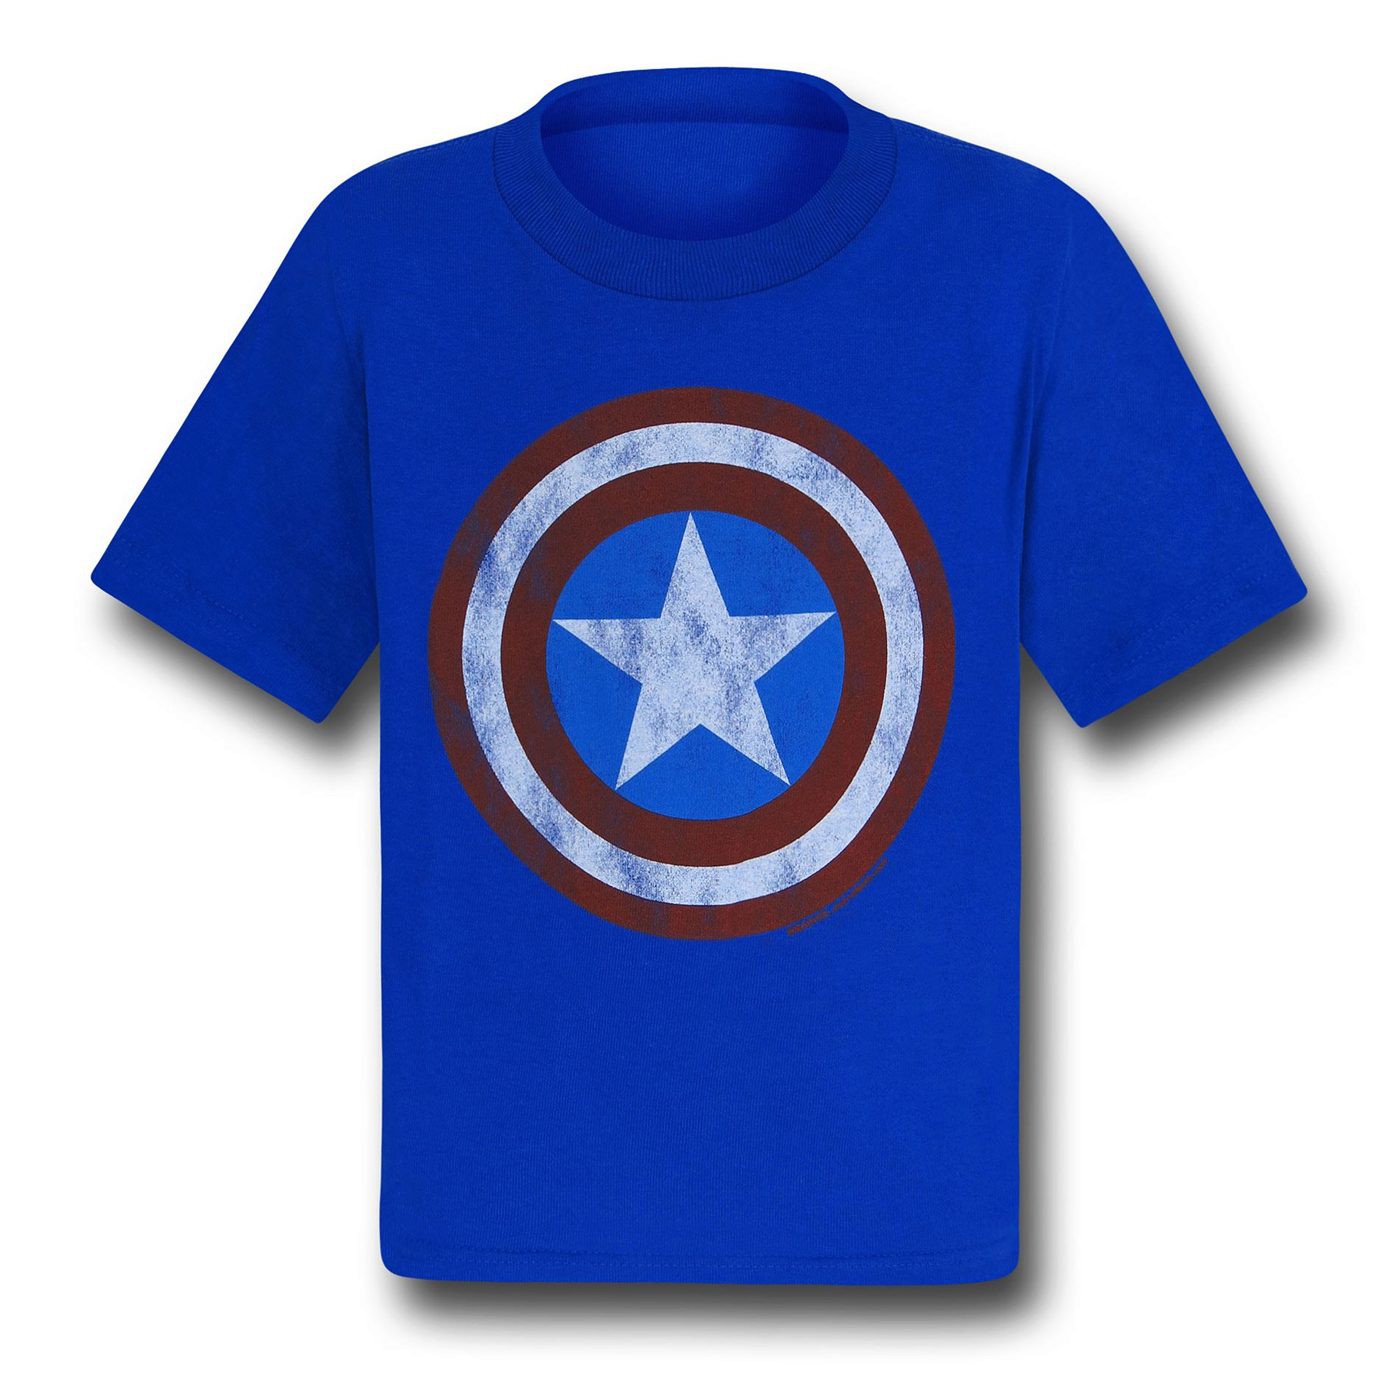 T shield. Футболка Капитан Америка. Футболка щит. Мини Капитан Америка. Captain футболка со значками.